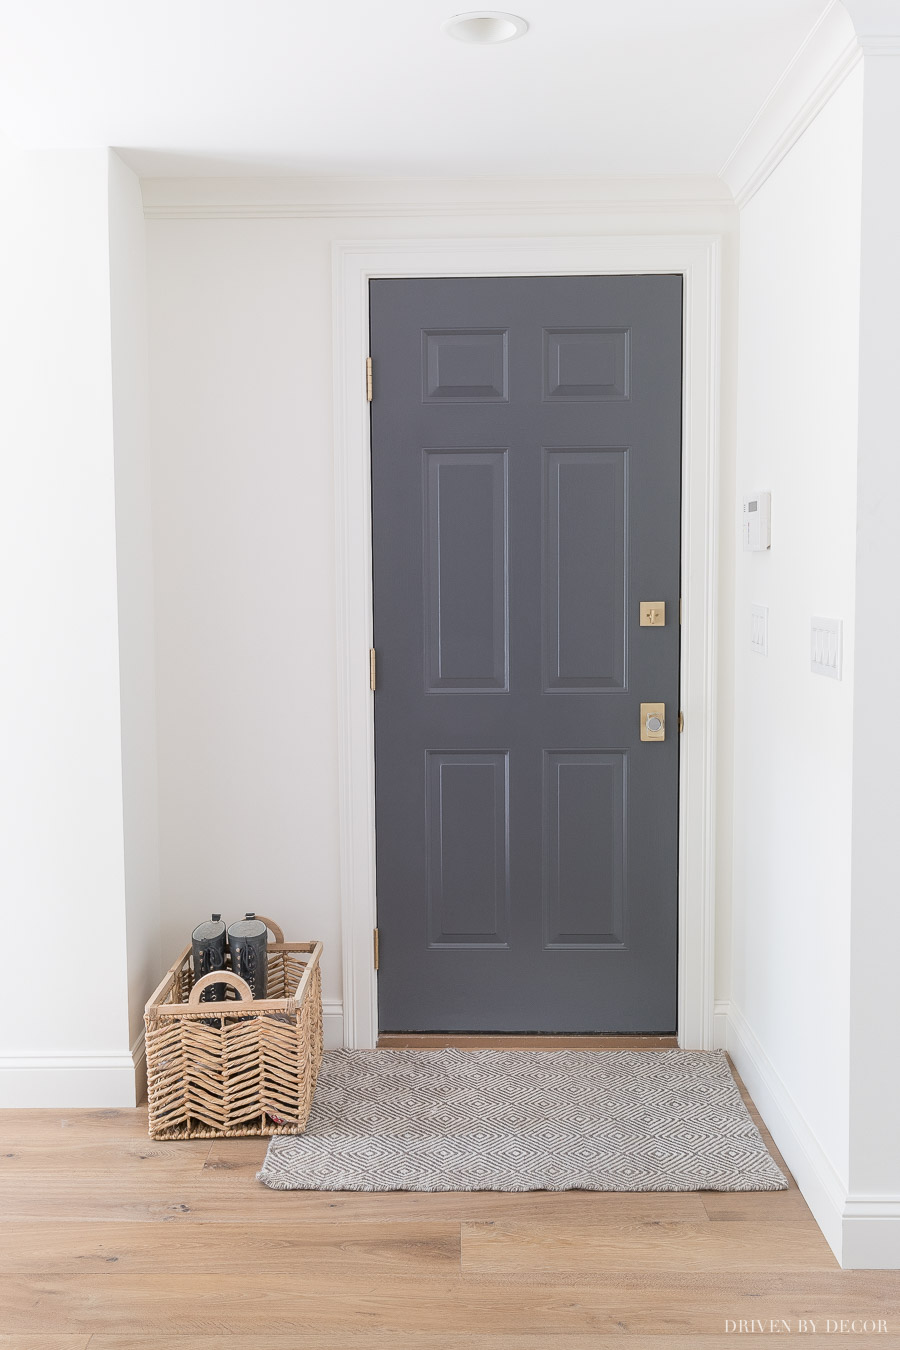 Door is painted Benjamin Moore Charcoal Slate - a beautiful dark gray paint color!